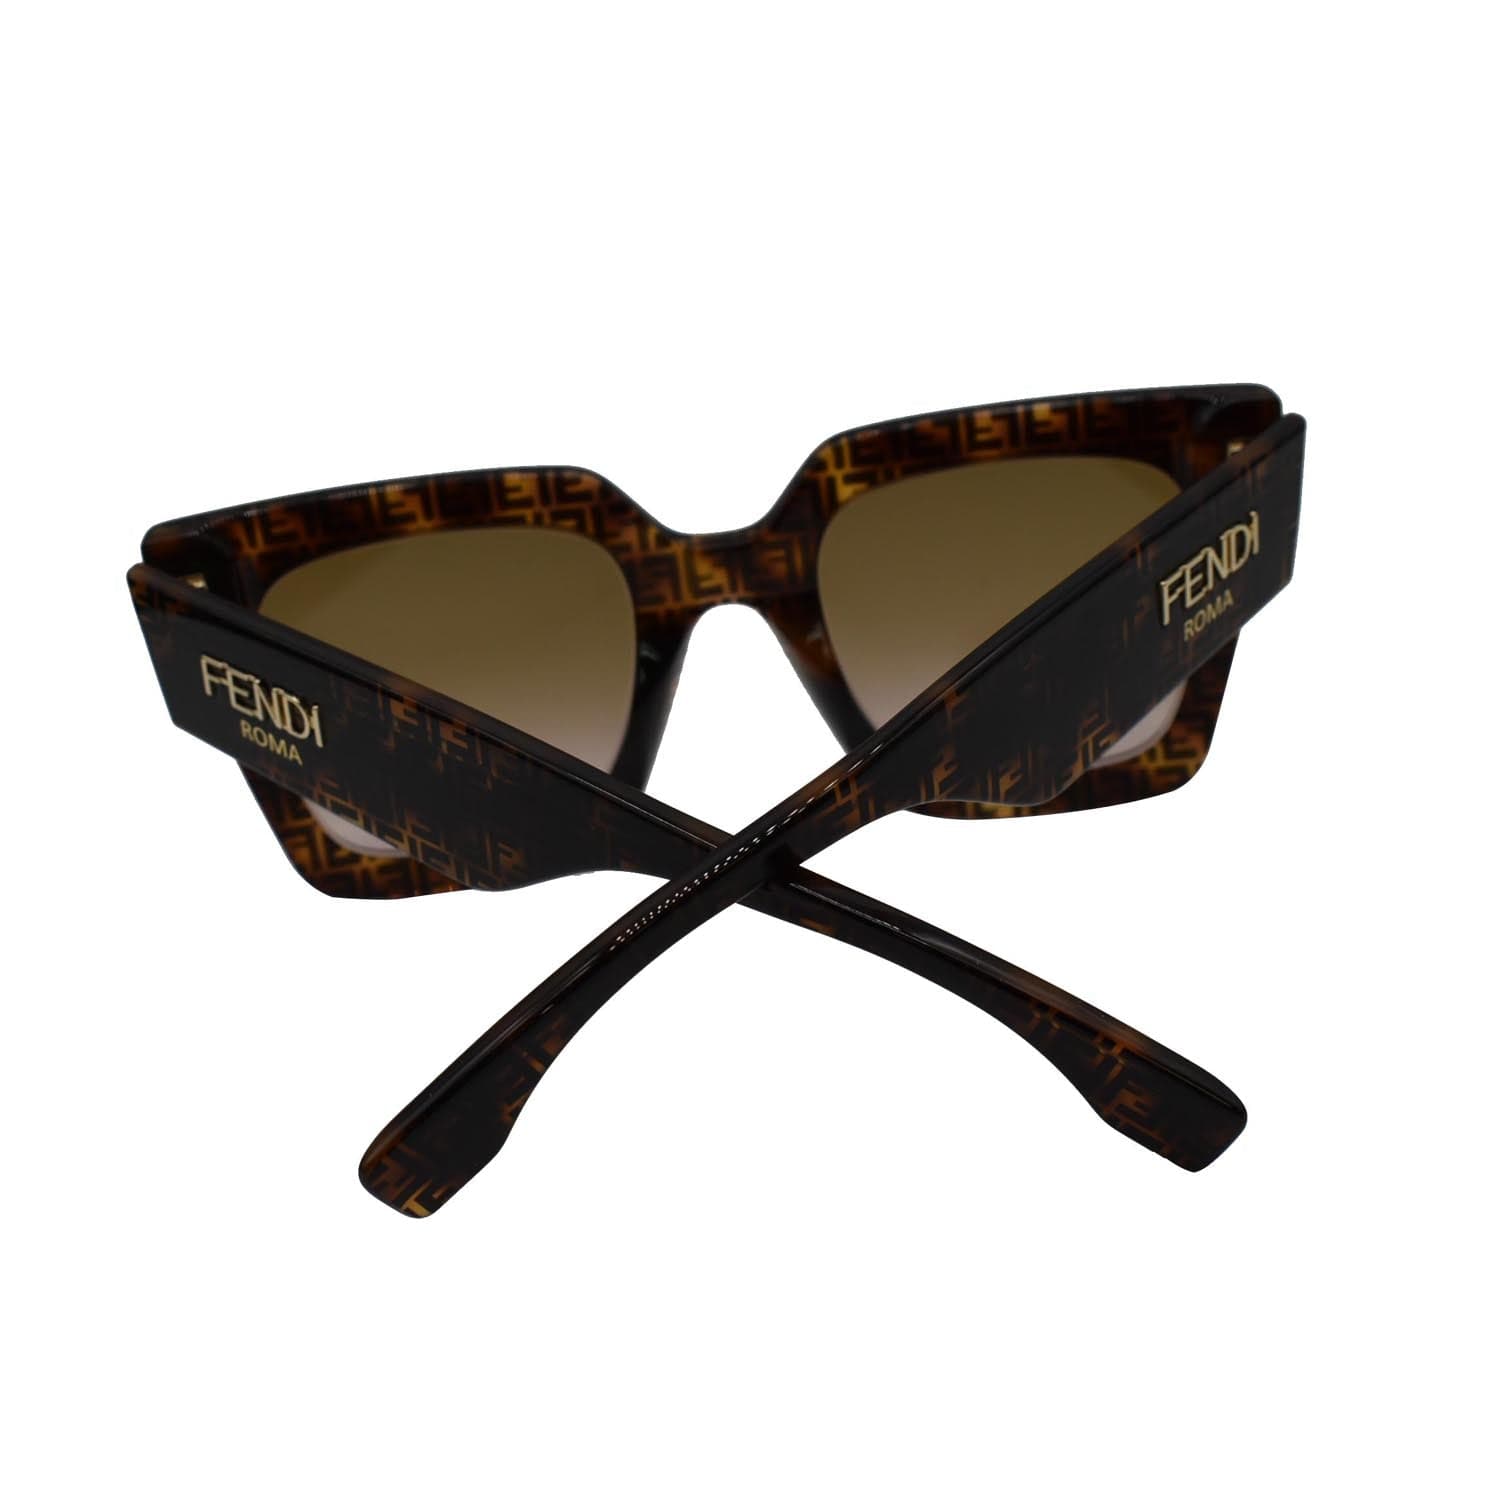 Fendi - Fendi Roma - Cat-Eye Sunglasses - Havana - Sunglasses